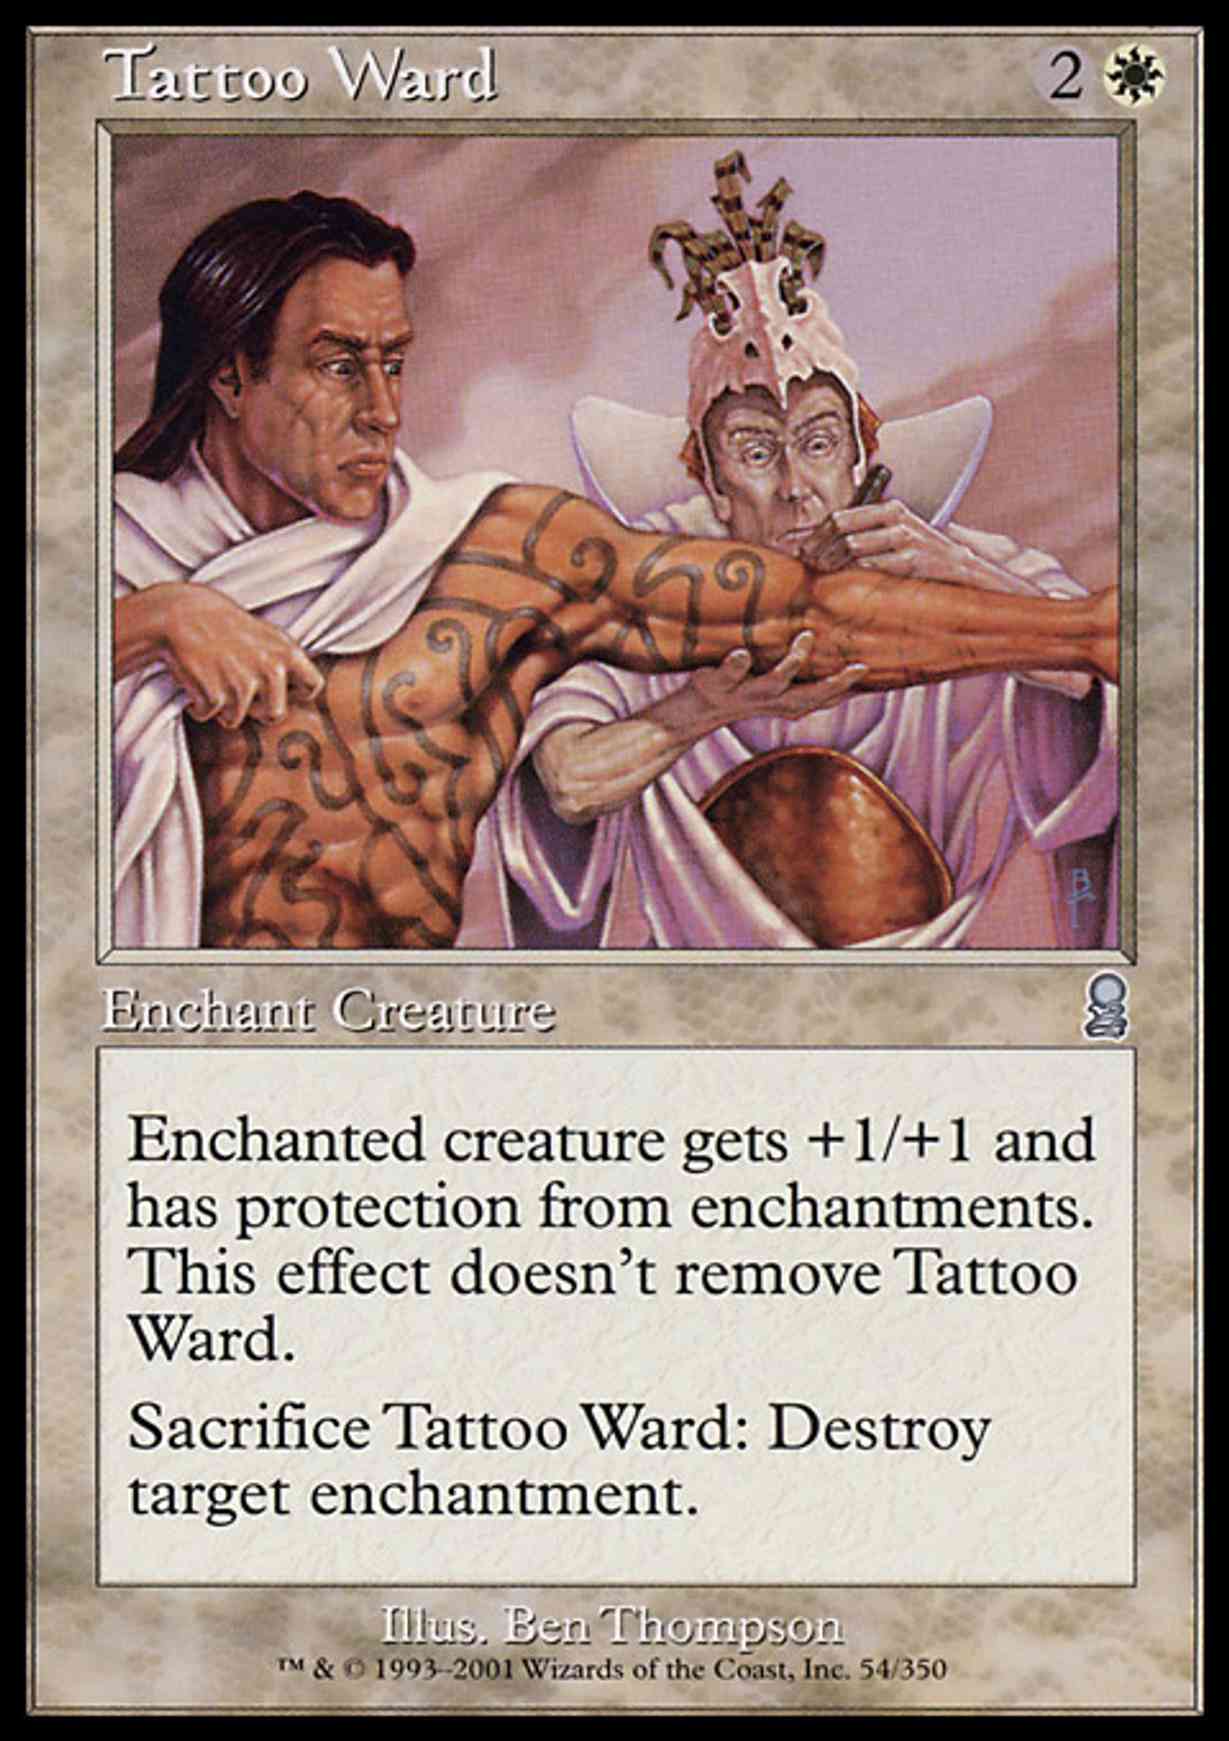 Tattoo Ward magic card front